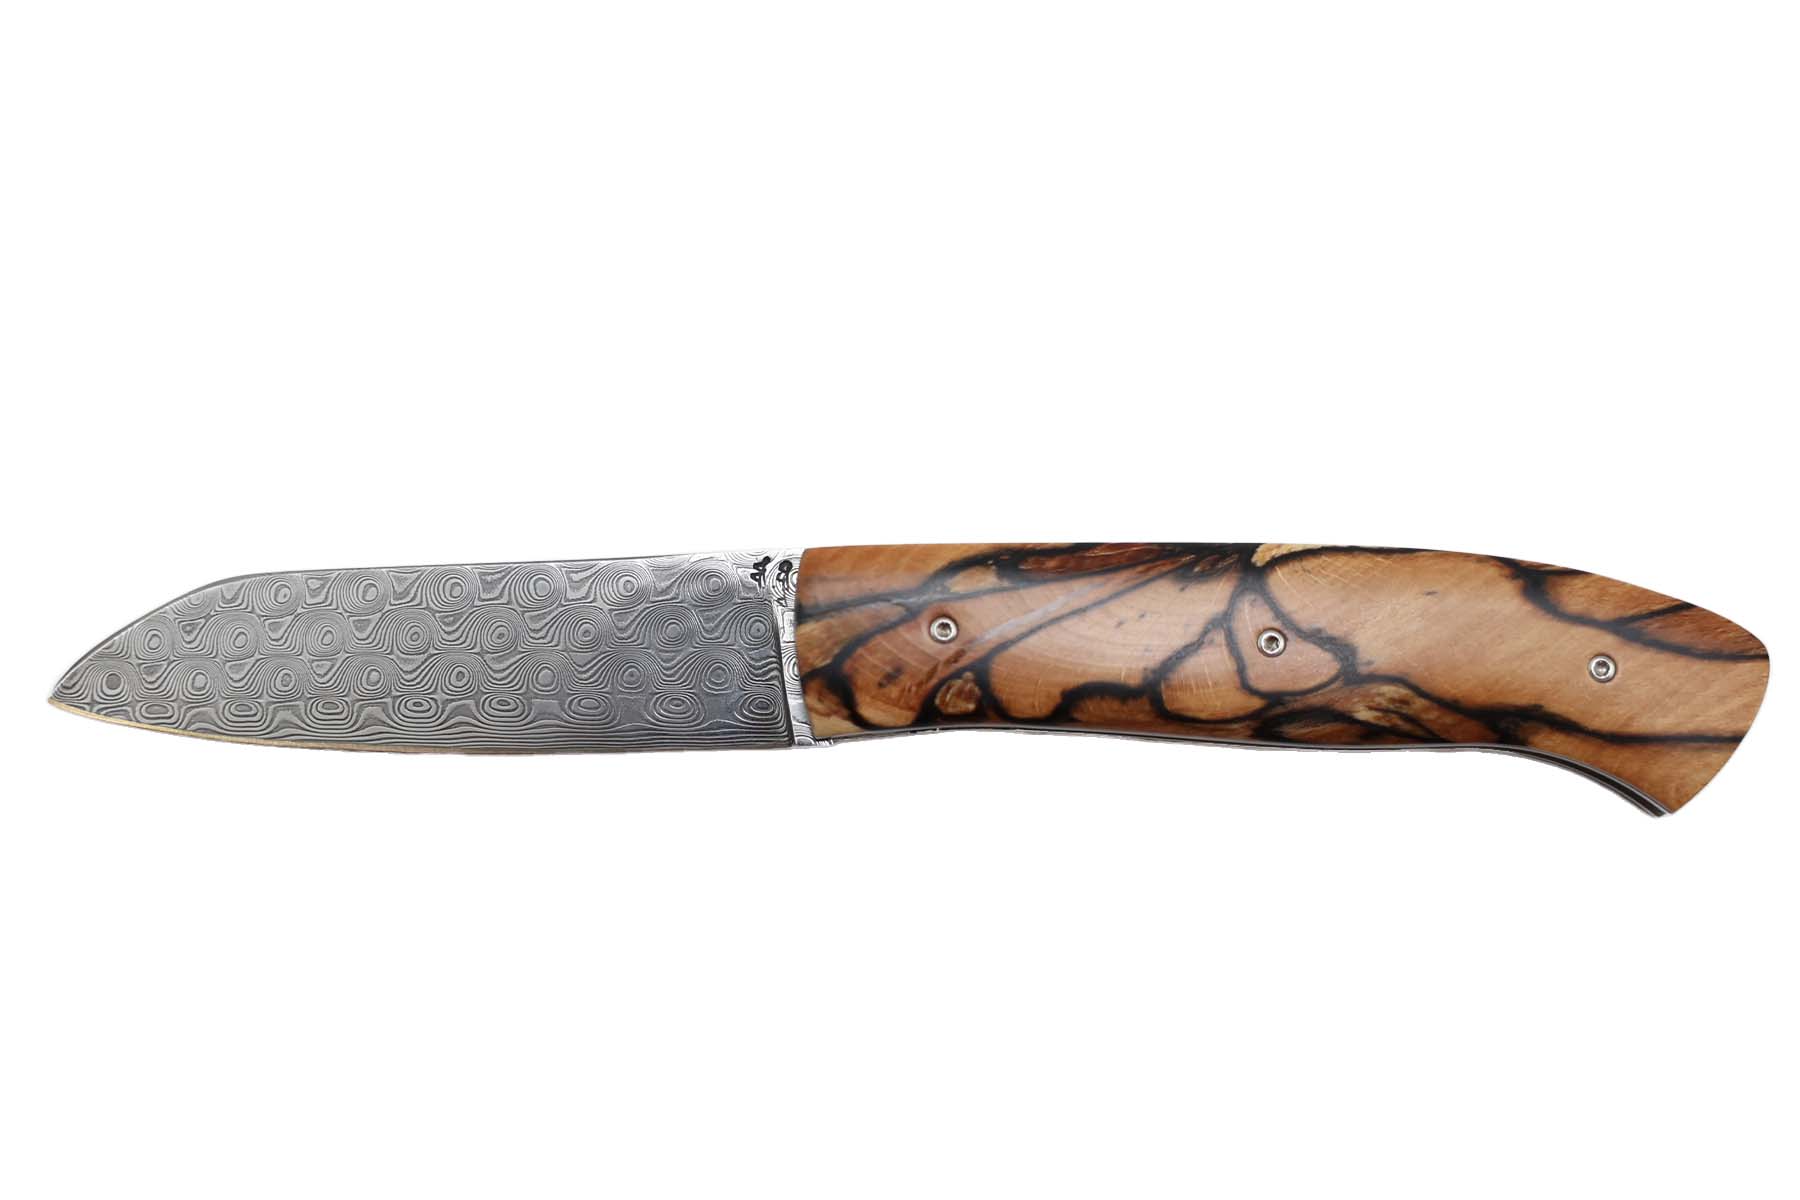 Couteau Artisanal de Joël Grandjean , hêtre echauffé - Damasteel rose